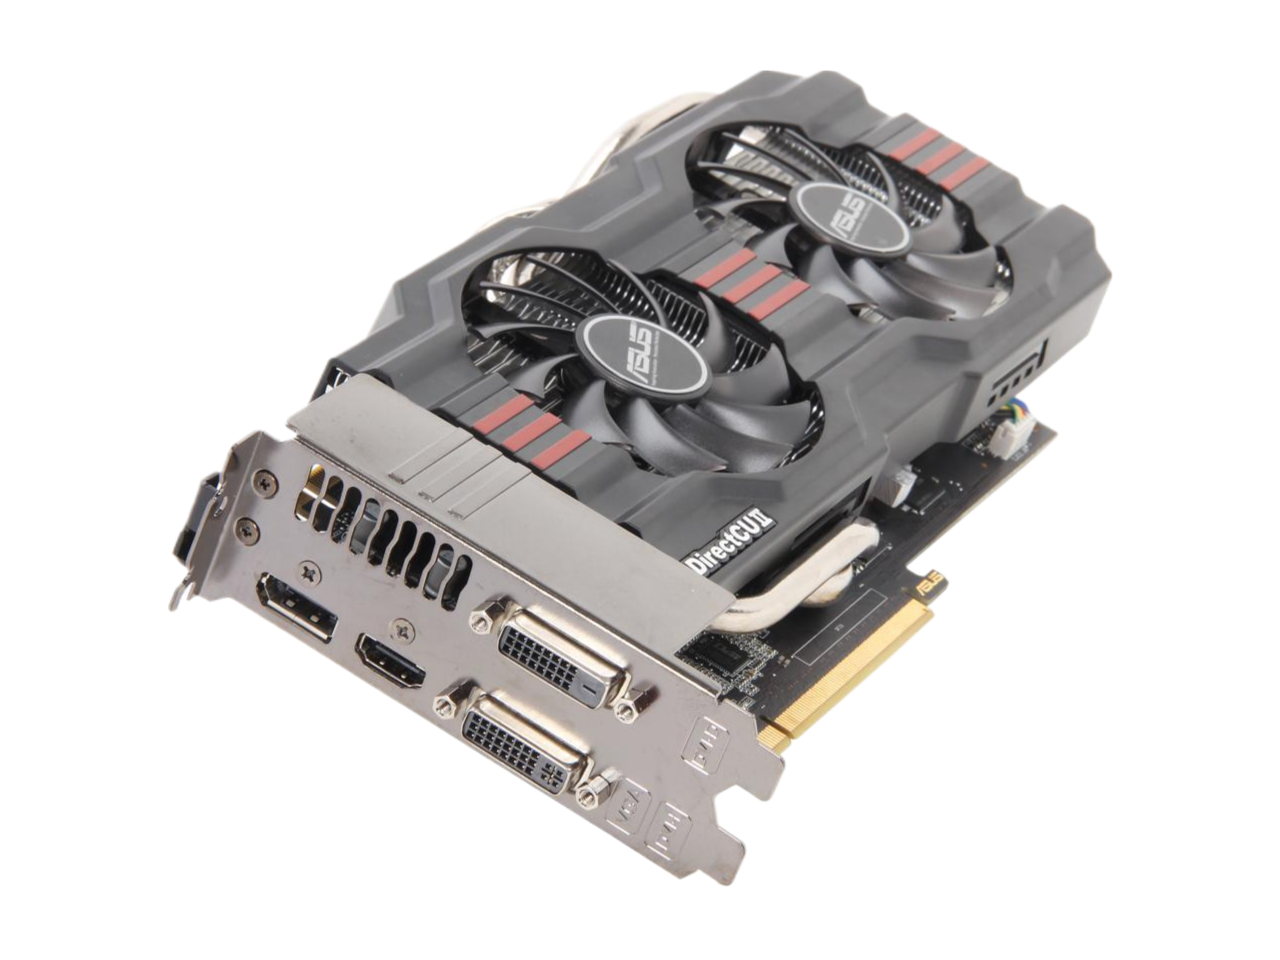 ASUS GeForce GTX 660 Ti 2GB 192-Bit GDDR5 G-SYNC Support PCI Express 3.0 x16 HDCP Ready SLI Support Video Card GTX660 TI-DC2O-2GD5